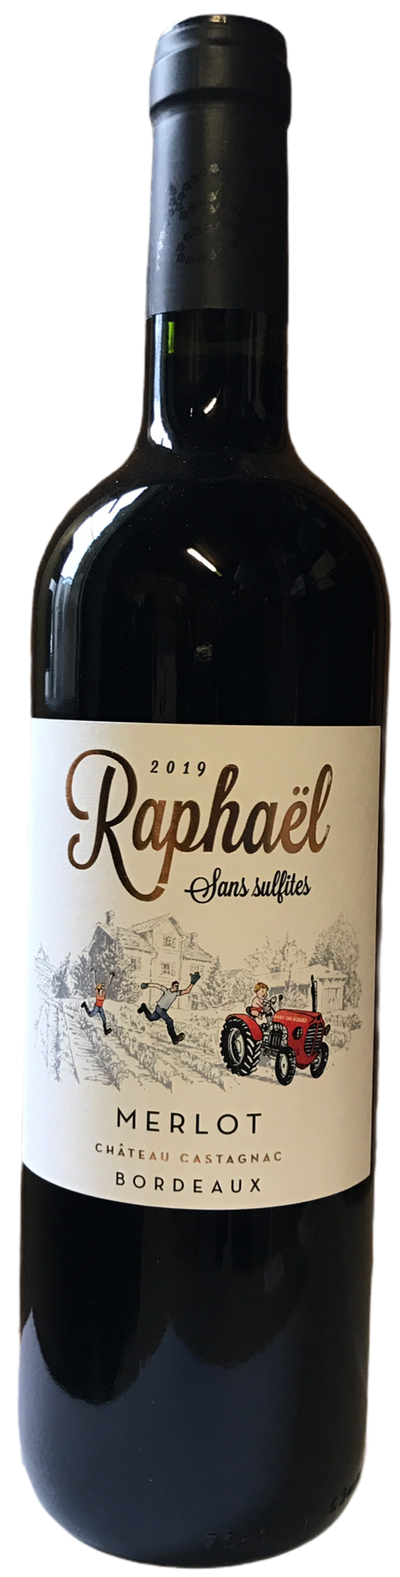 Raphael - AOC Bordeaux 2019 - Sulfite free - Alcohol degree 13.5 - 75cl - Slowood